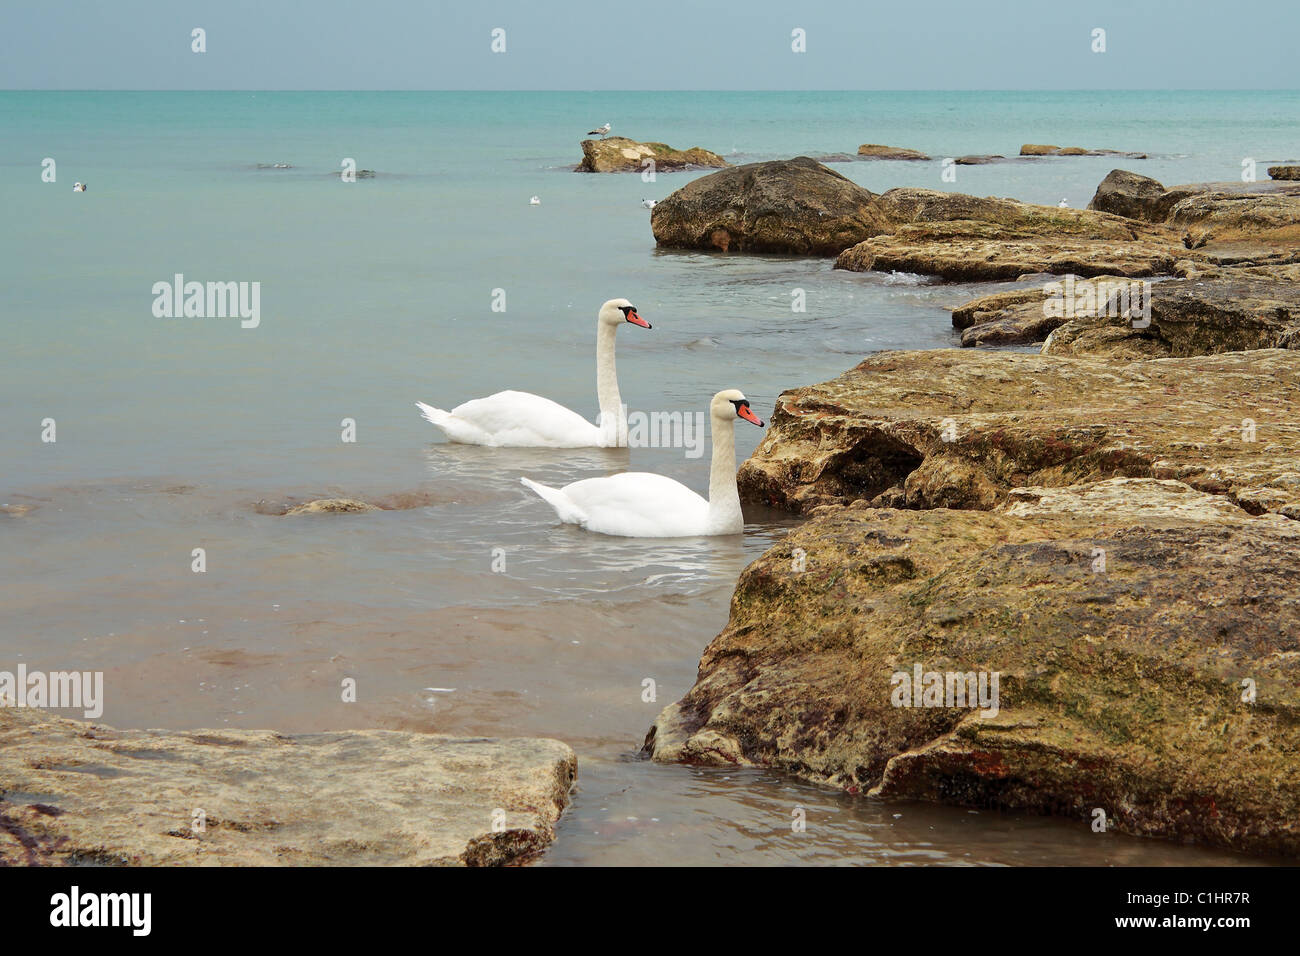 Two swans swimming near the shore. Caspian Sea. Stock Photo